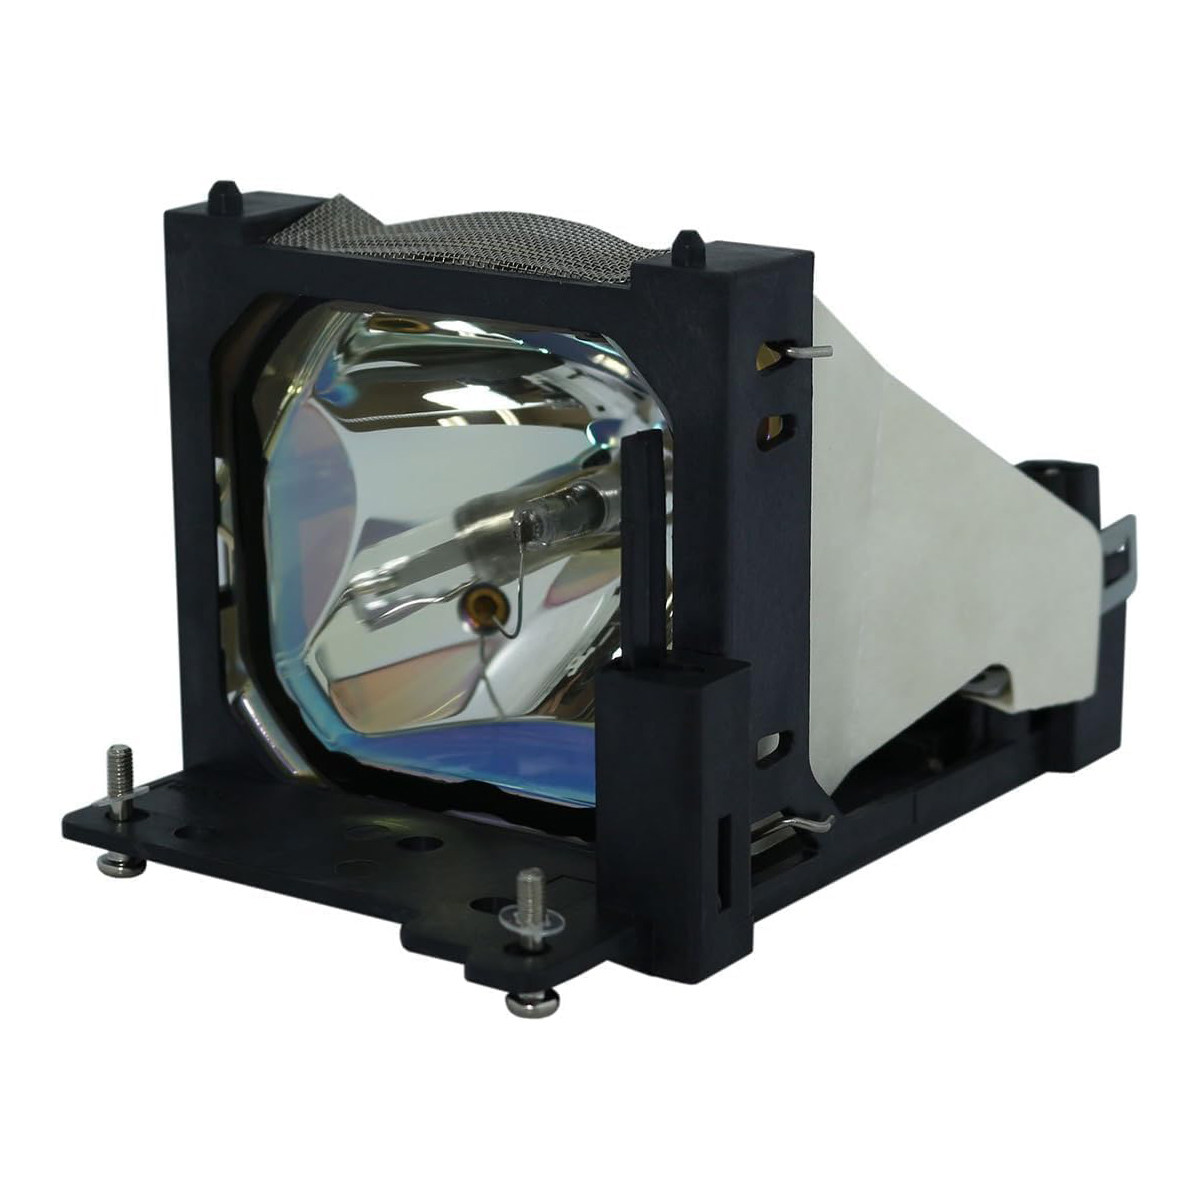 Replacement Projector lamp RLC-160-03A For VIEWSONIC PJ700 PJ750 PJ750-1